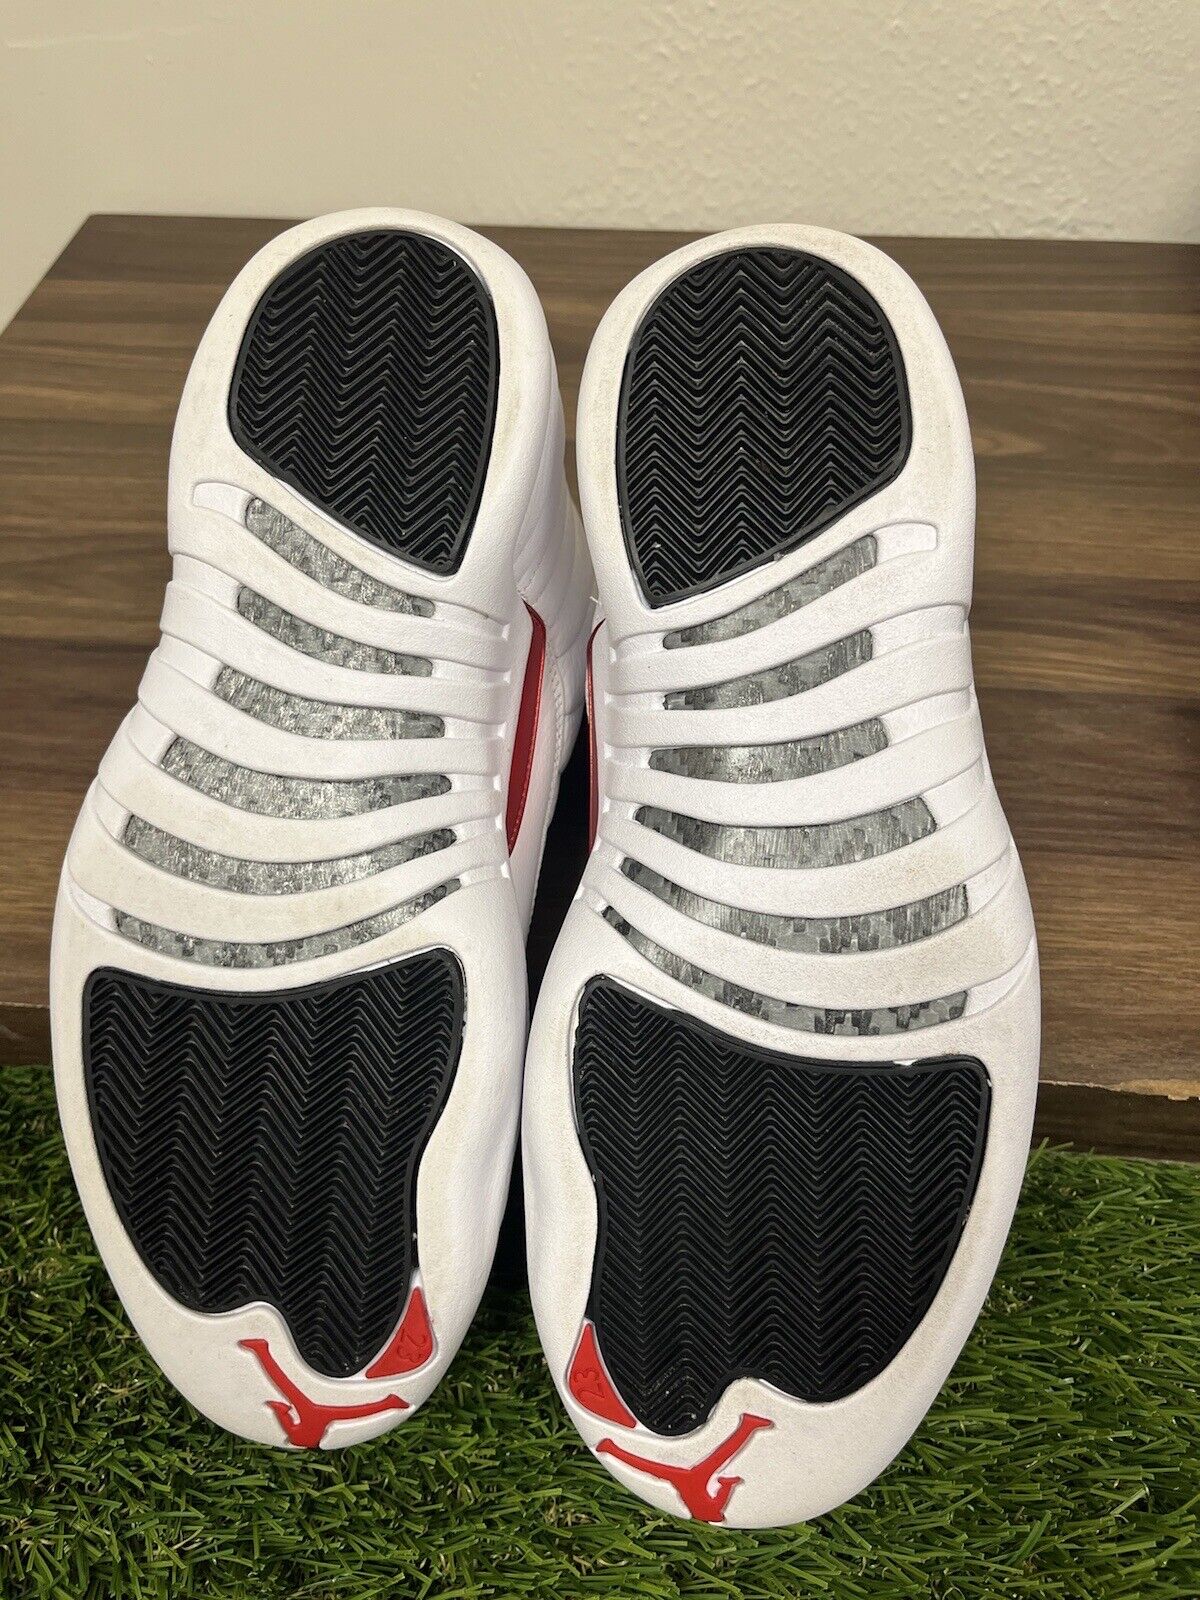 Nike Air Jordan 12 Twist size 10.5 CT8013-106 OG XII Retro